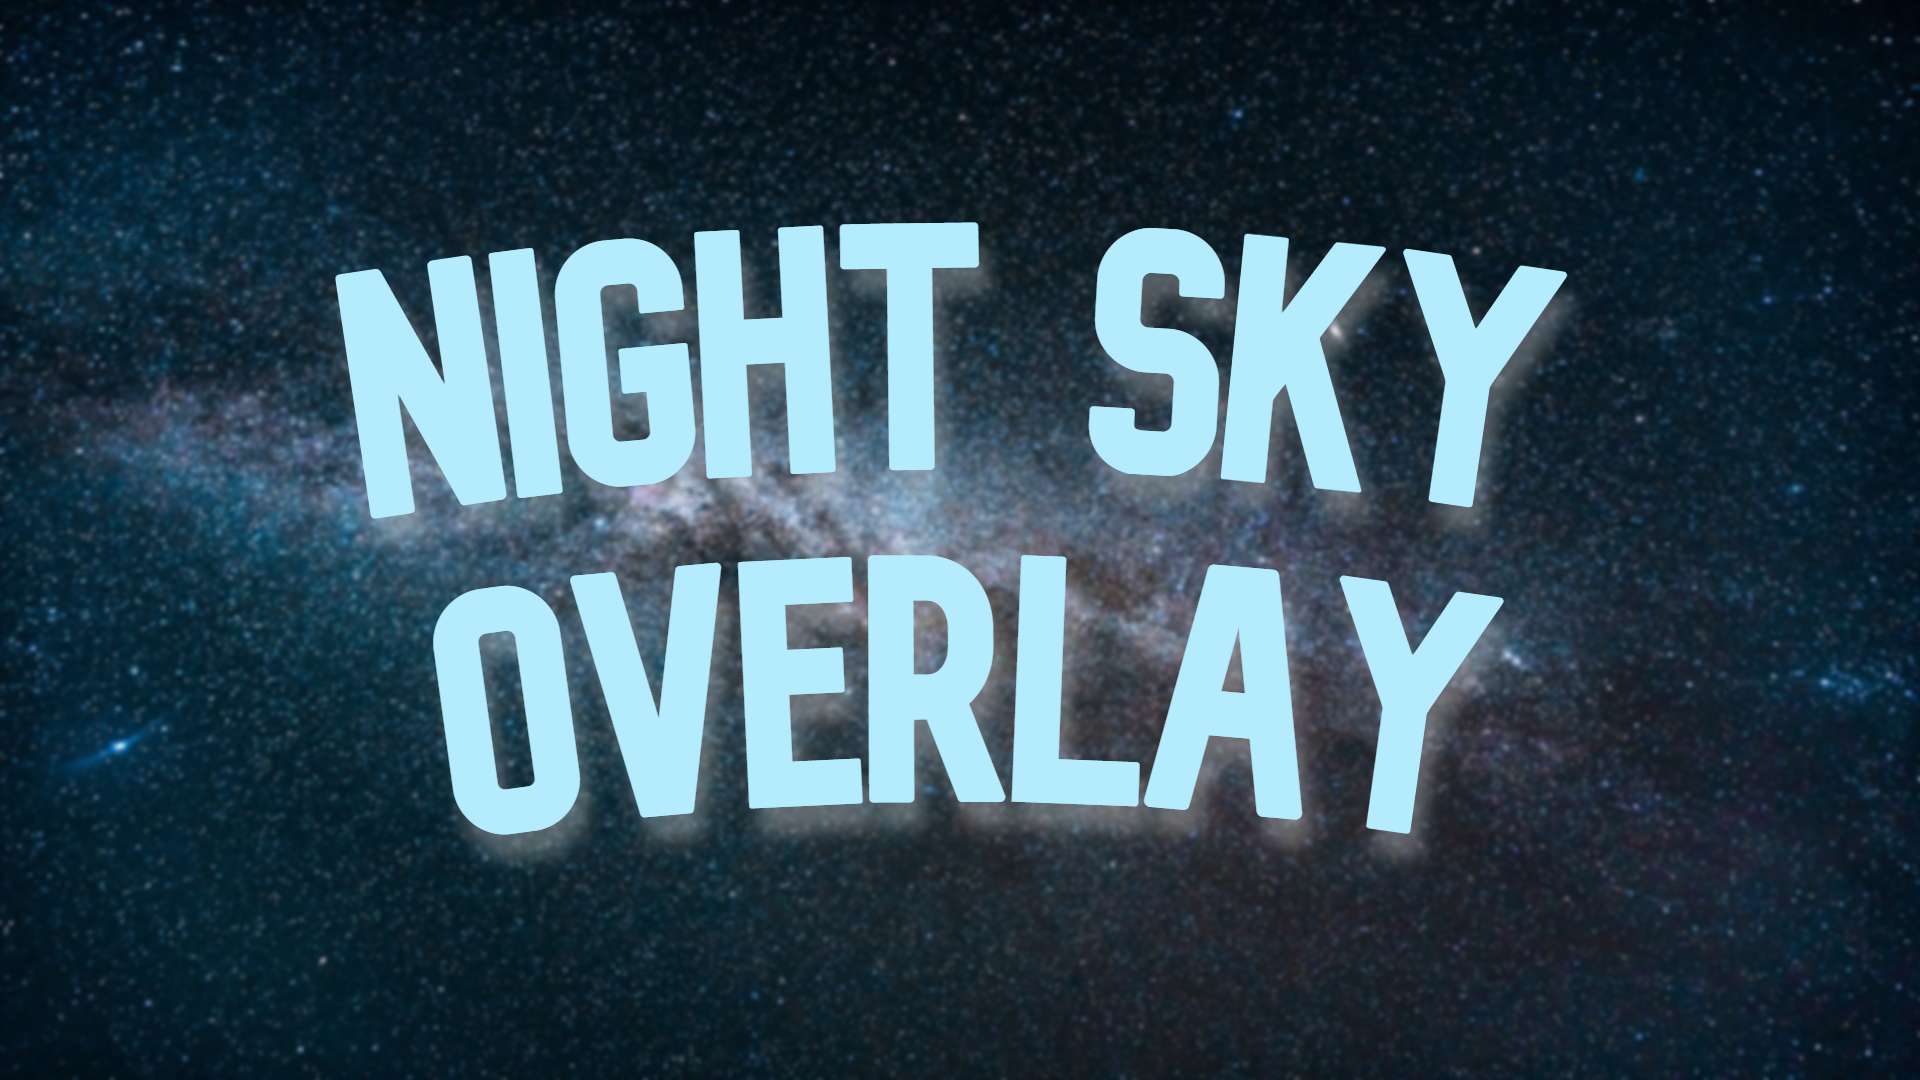 Night Sky Overlay #3 16x by rh56 on PvPRP